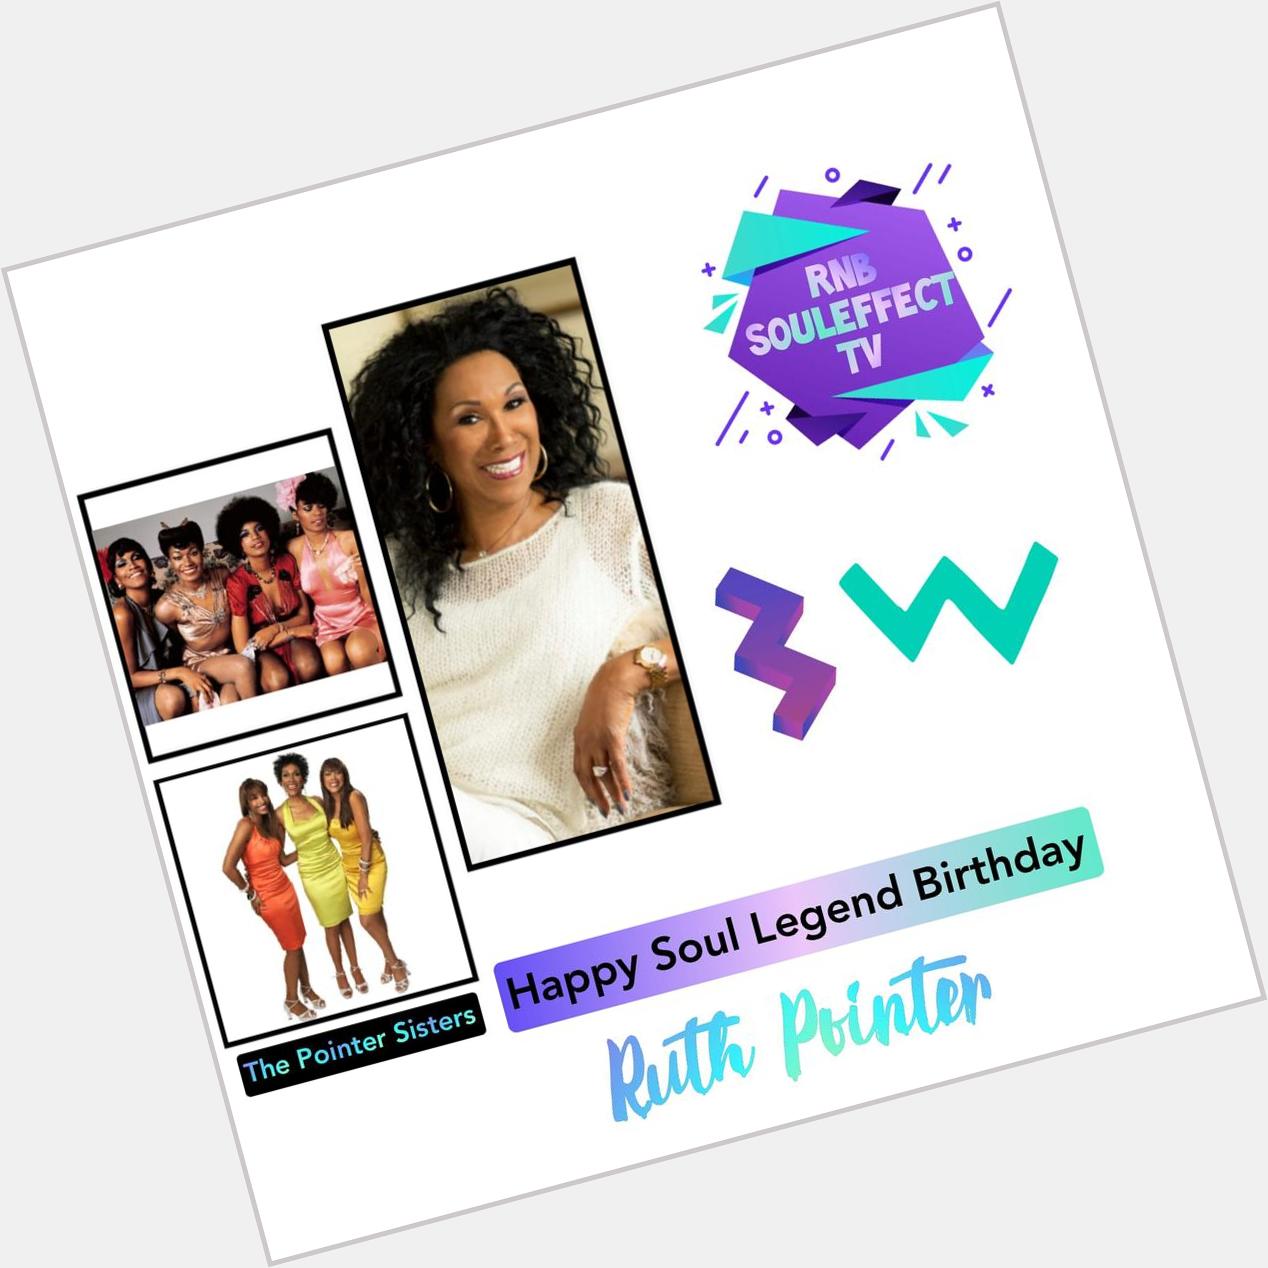 Happy Soul Legend Birthday
Ruth Pointer Member Of Grammy Award Group 